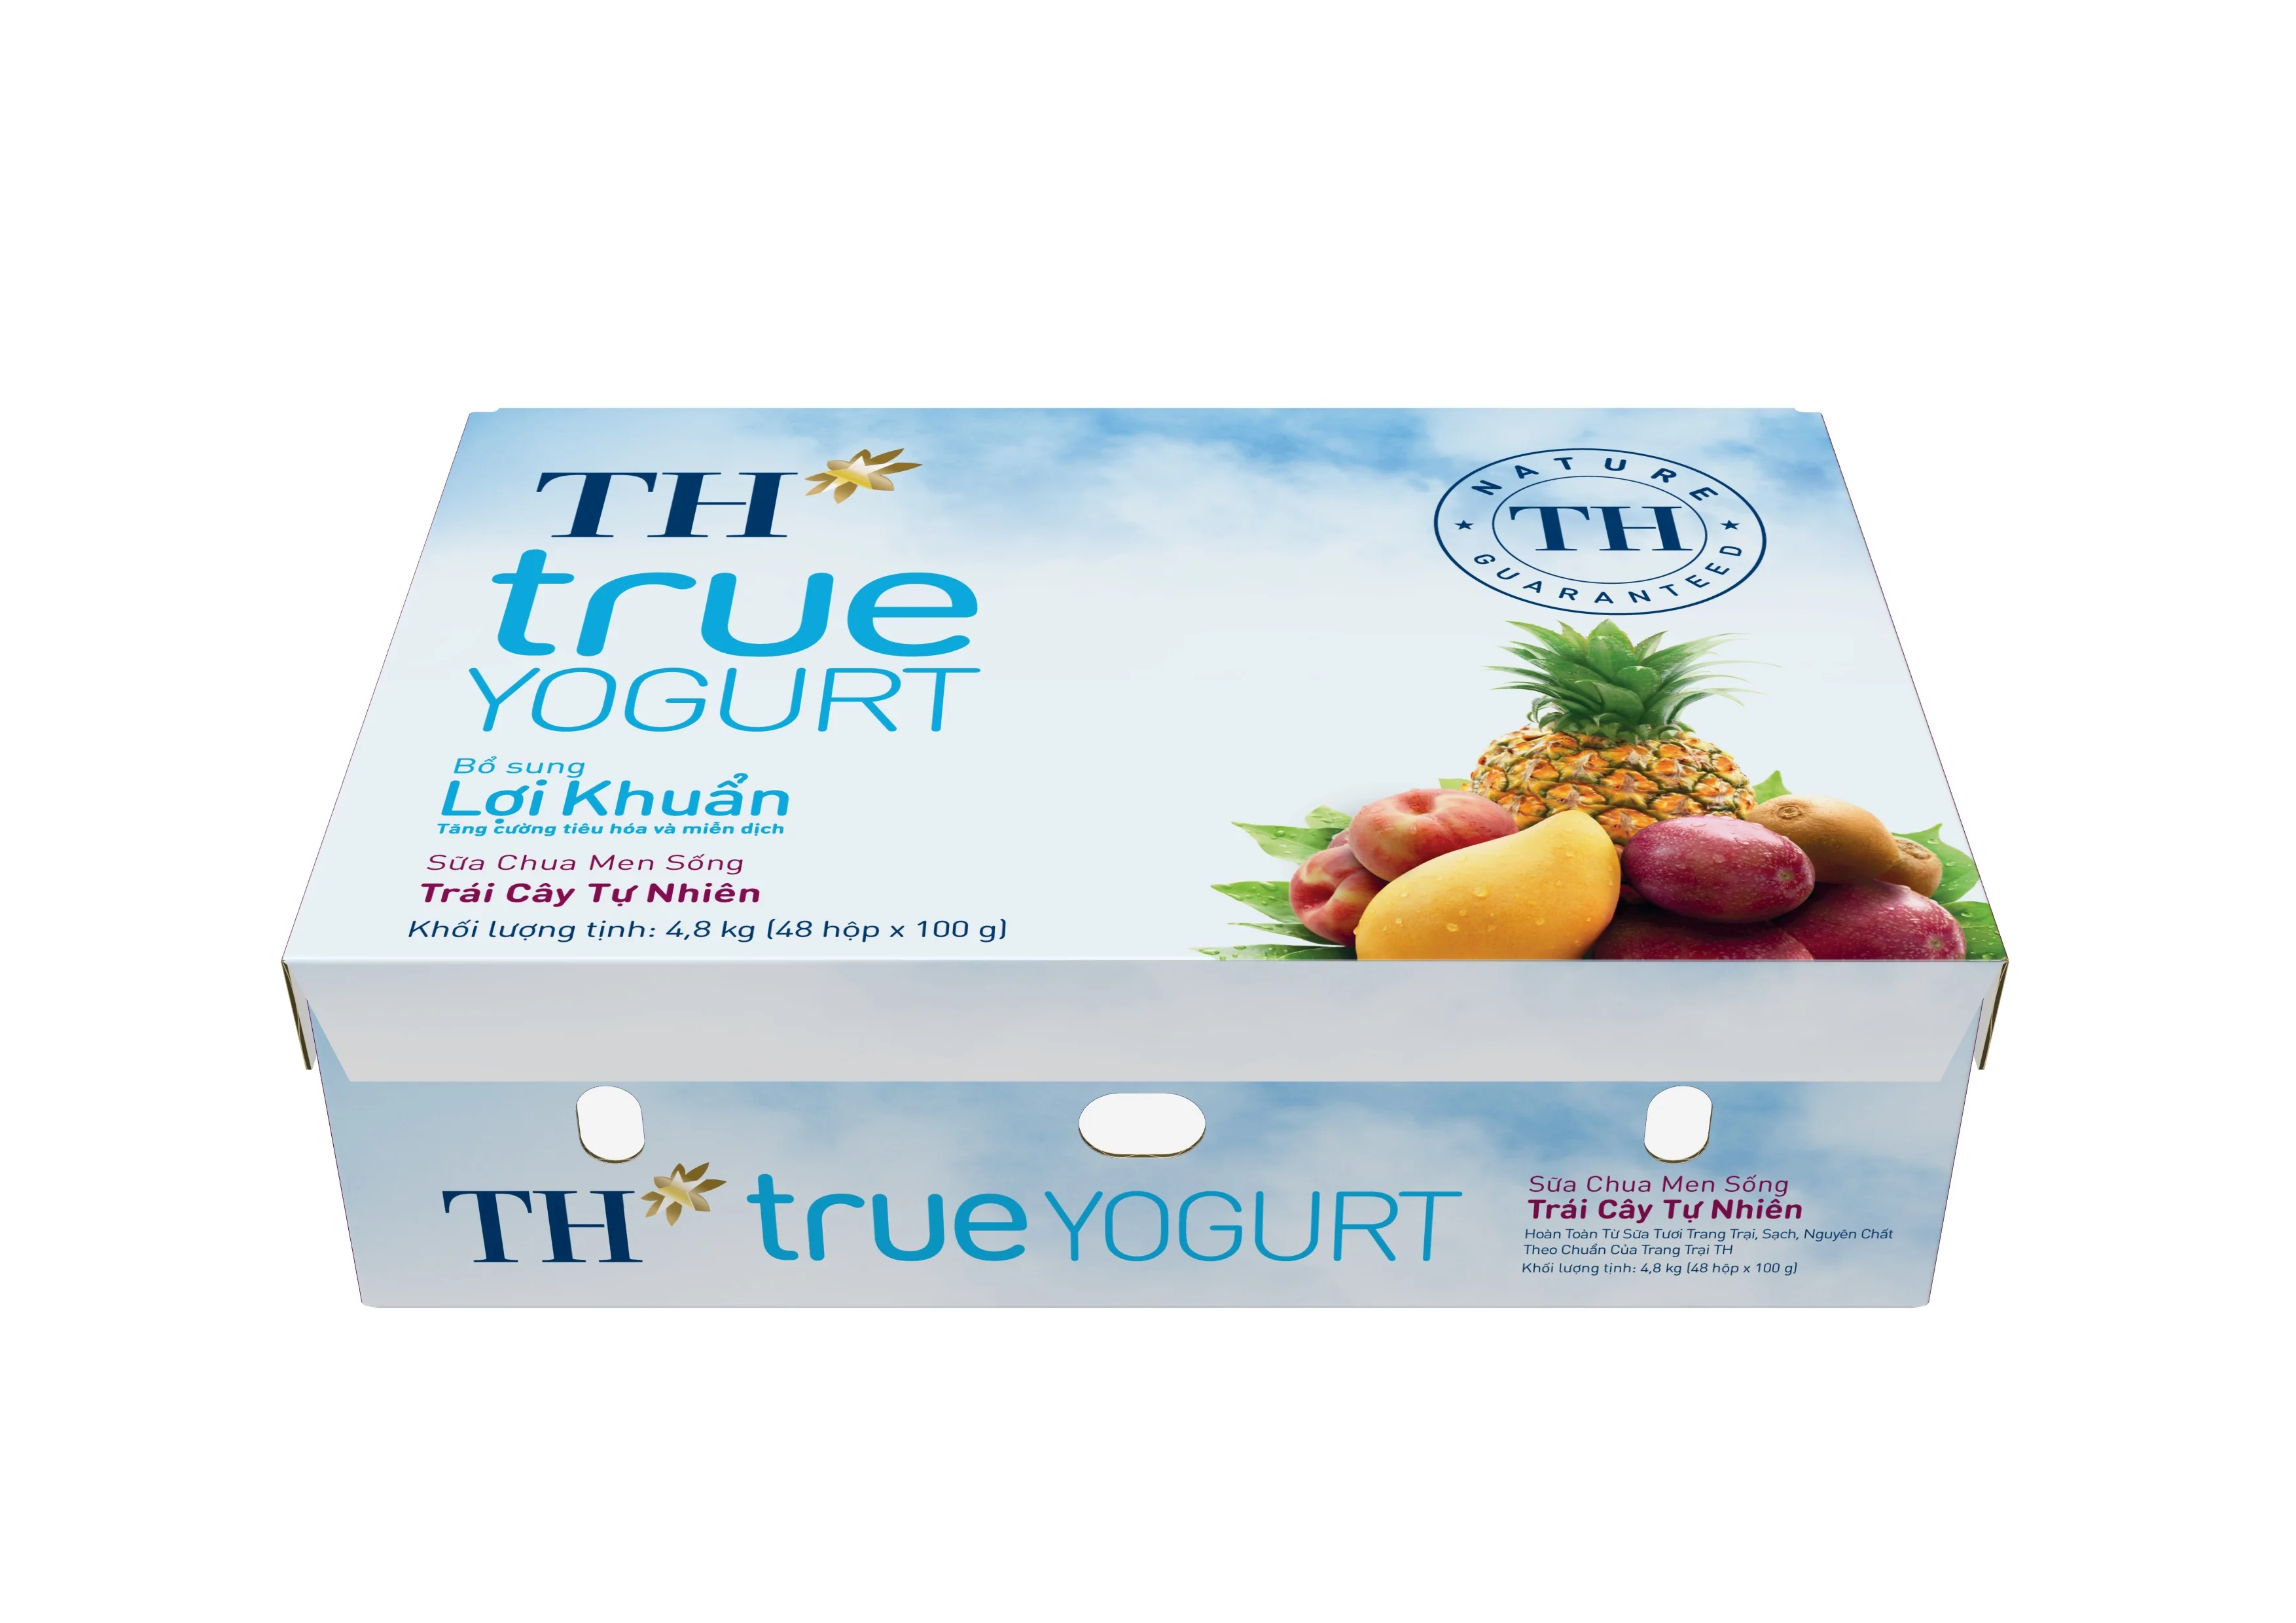 TH true YOGURT - Probiotic Yogurt - Natural Fruits 100gx48C Short Lead Time Dairy Products Yogurt with 45 Days Shelf Life